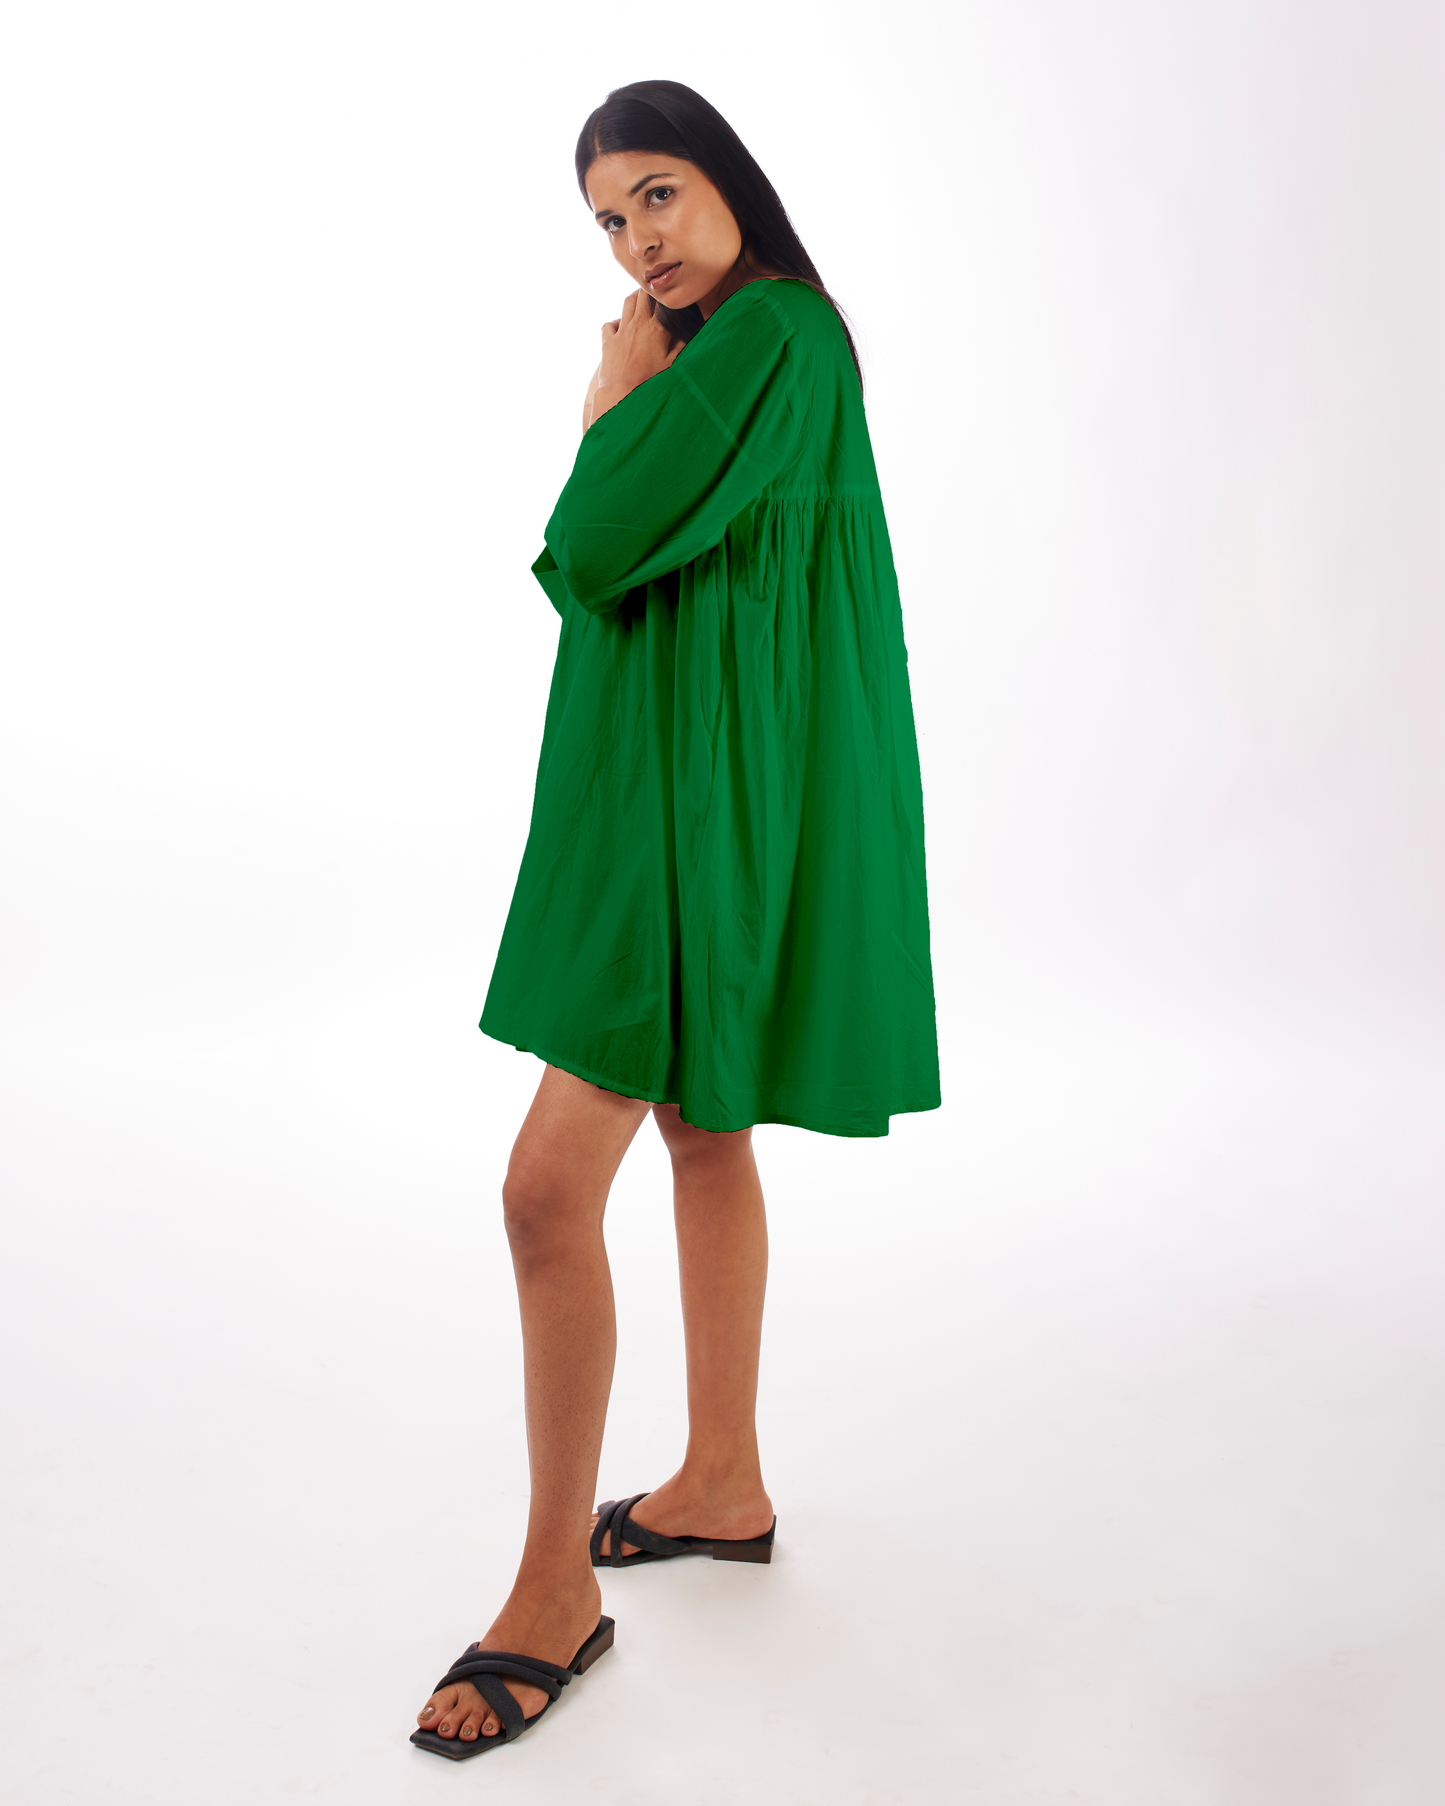 Green Yoke Mini Dress at Kamakhyaa by Kamakhyaa. This item is Casual Wear, Green, KKYSS, Mini Dresses, Natural, Relaxed Fit, Solids, Summer Sutra, Womenswear